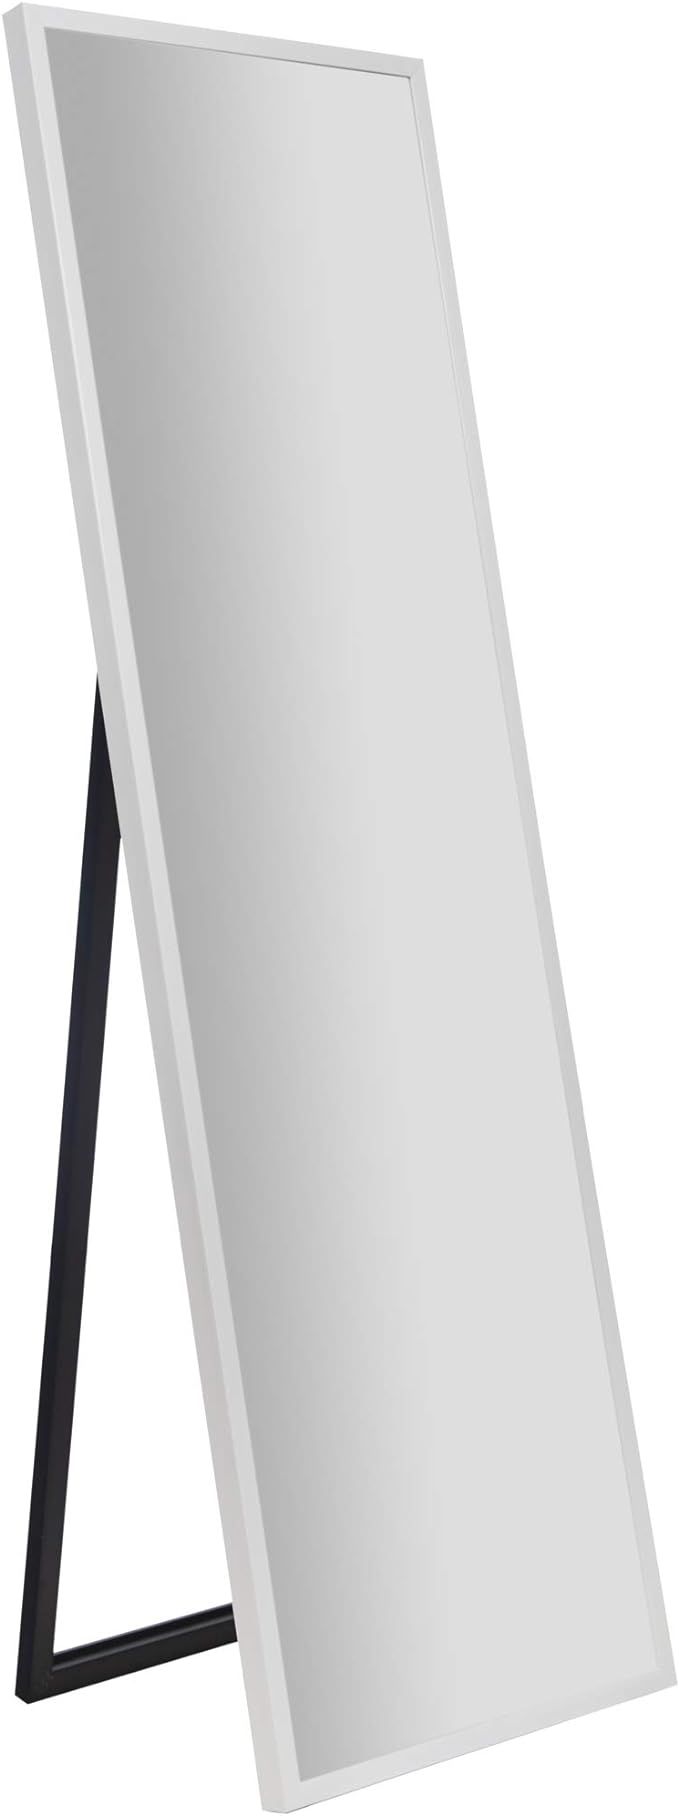 Gallery Solutions Framed Floor Free Standing Easel Full Length Mirror, 16" x 57", White | Amazon (US)